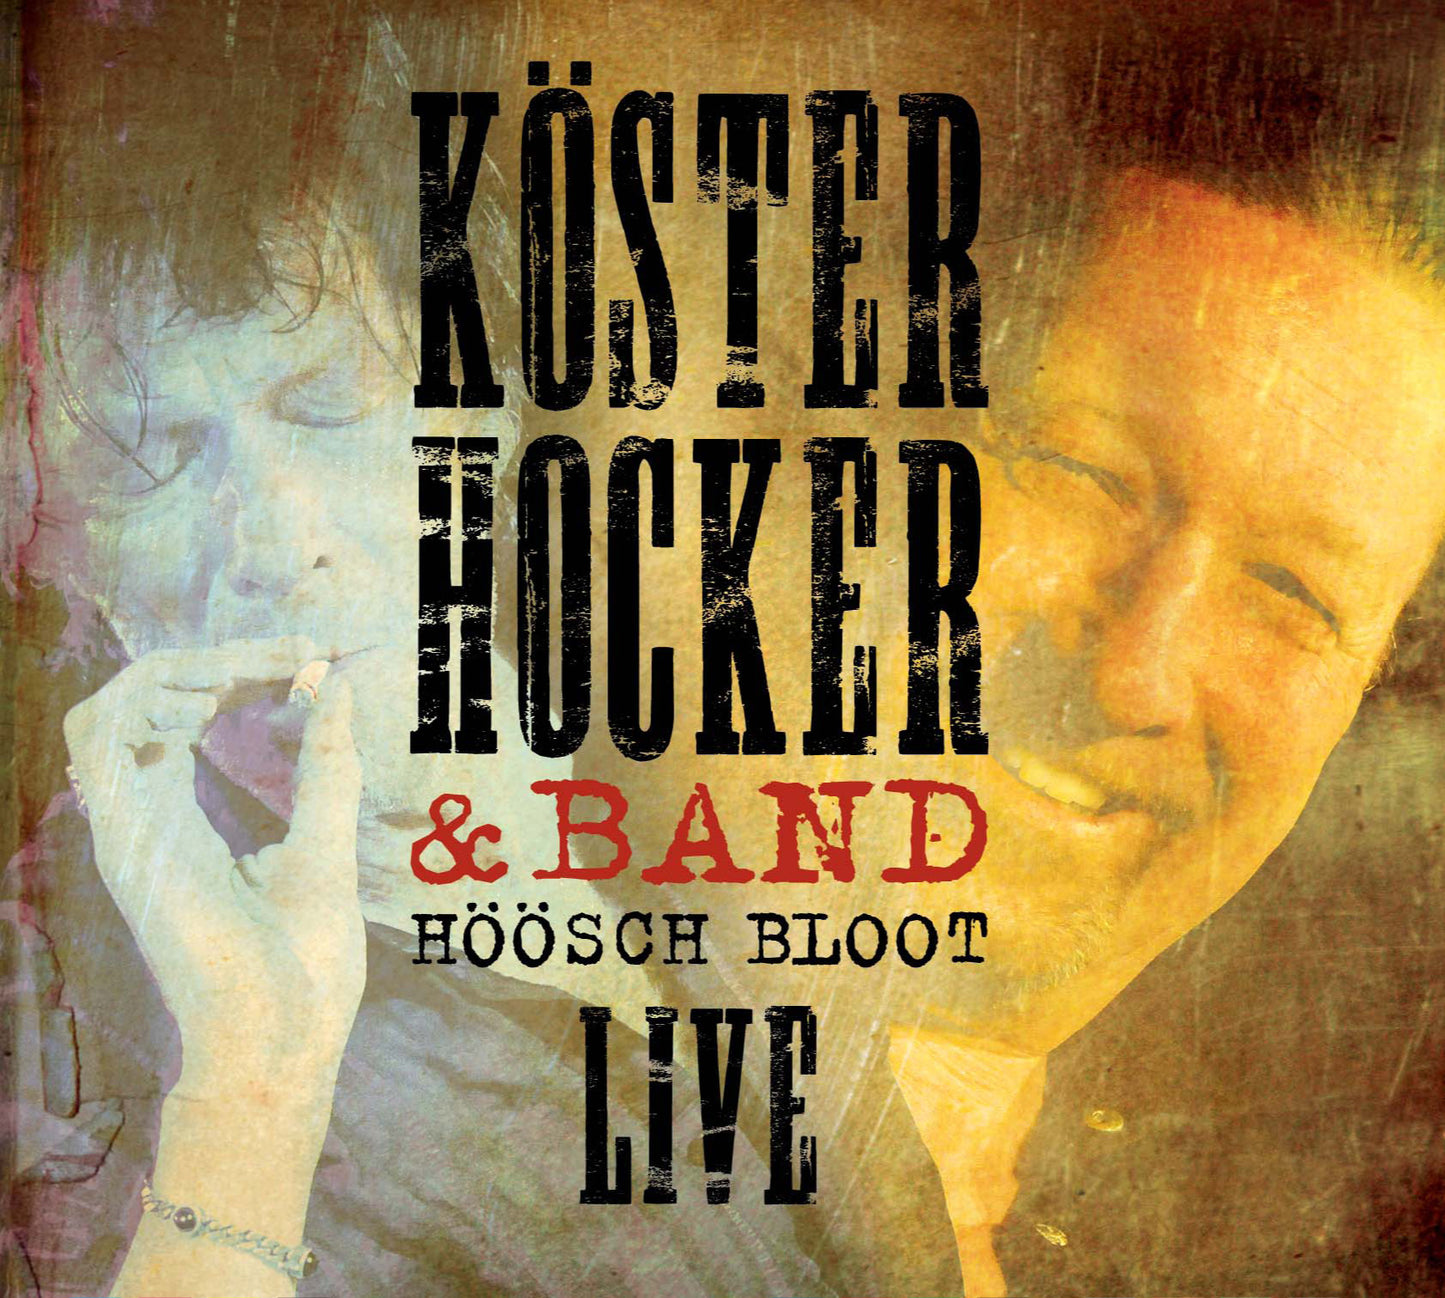 Köster &amp; Hocker and Band - Höösch Bloot Live (CD, Digipack)